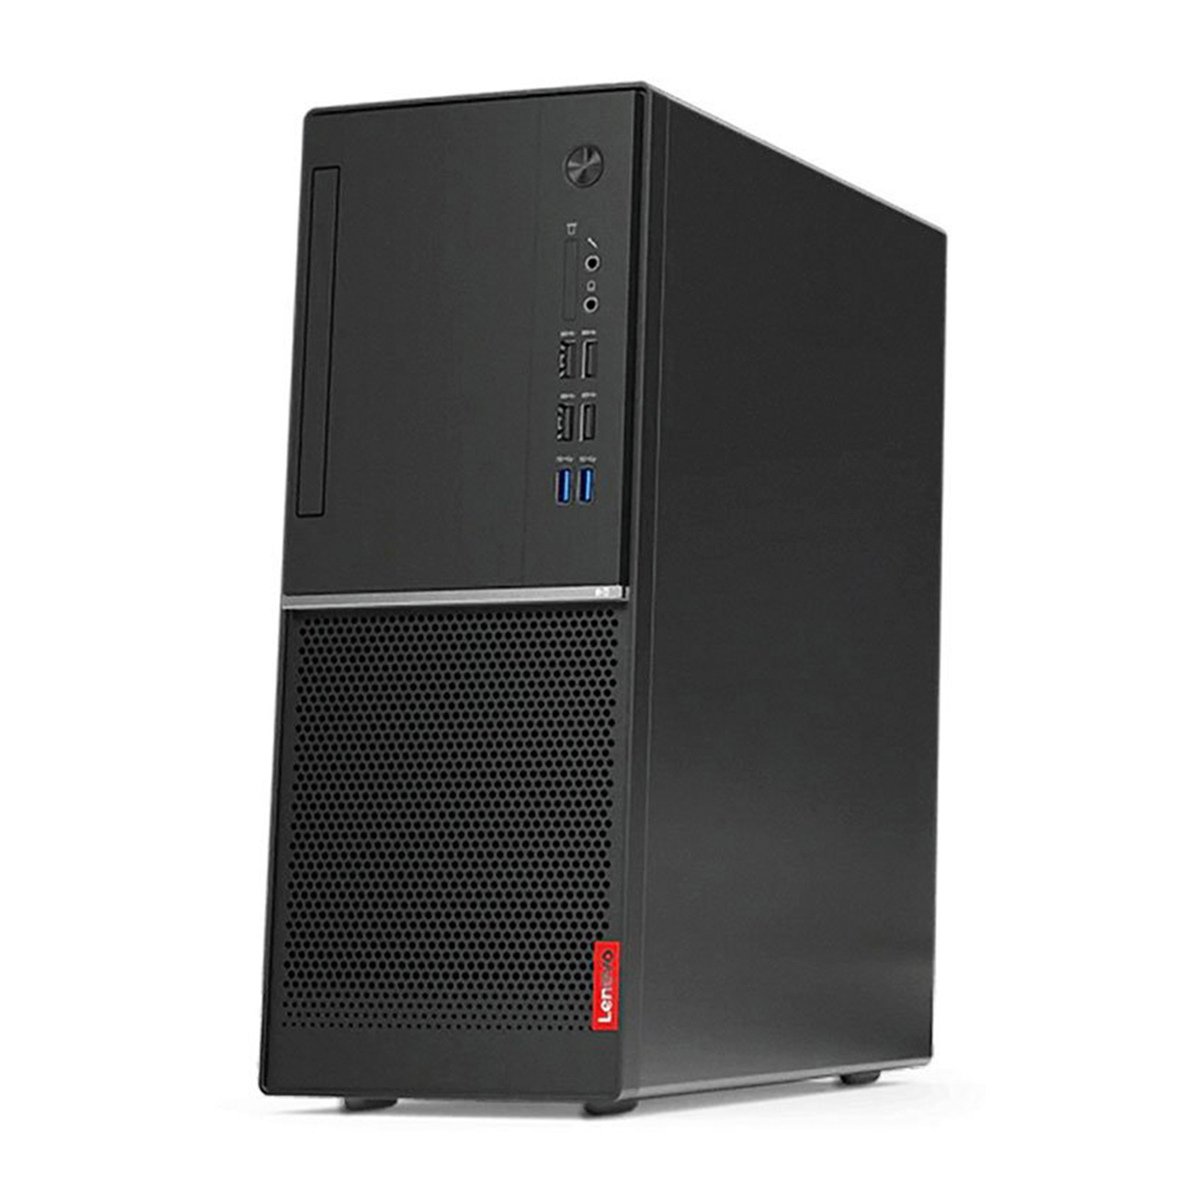 Lenovo V530 Tower-11BH0025AX ,Intel Core i3-9100,4GB RAM DDR4,1TB HDD,Integrated Graphics,Windows 10 Pro